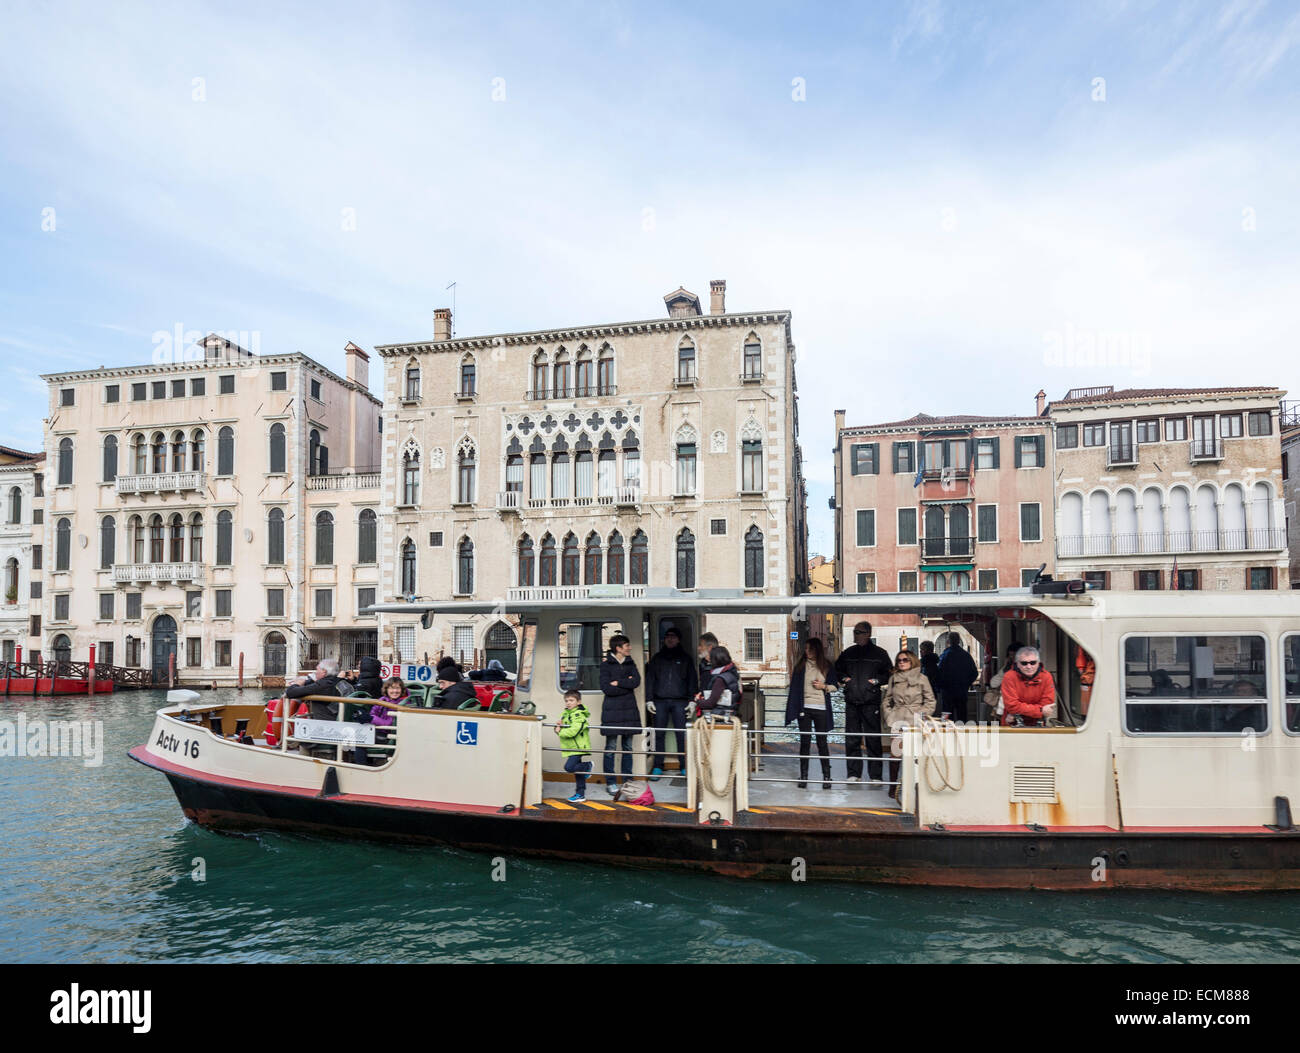 vaporetto on the Grand Canal, Venice, Italy Stock Photo